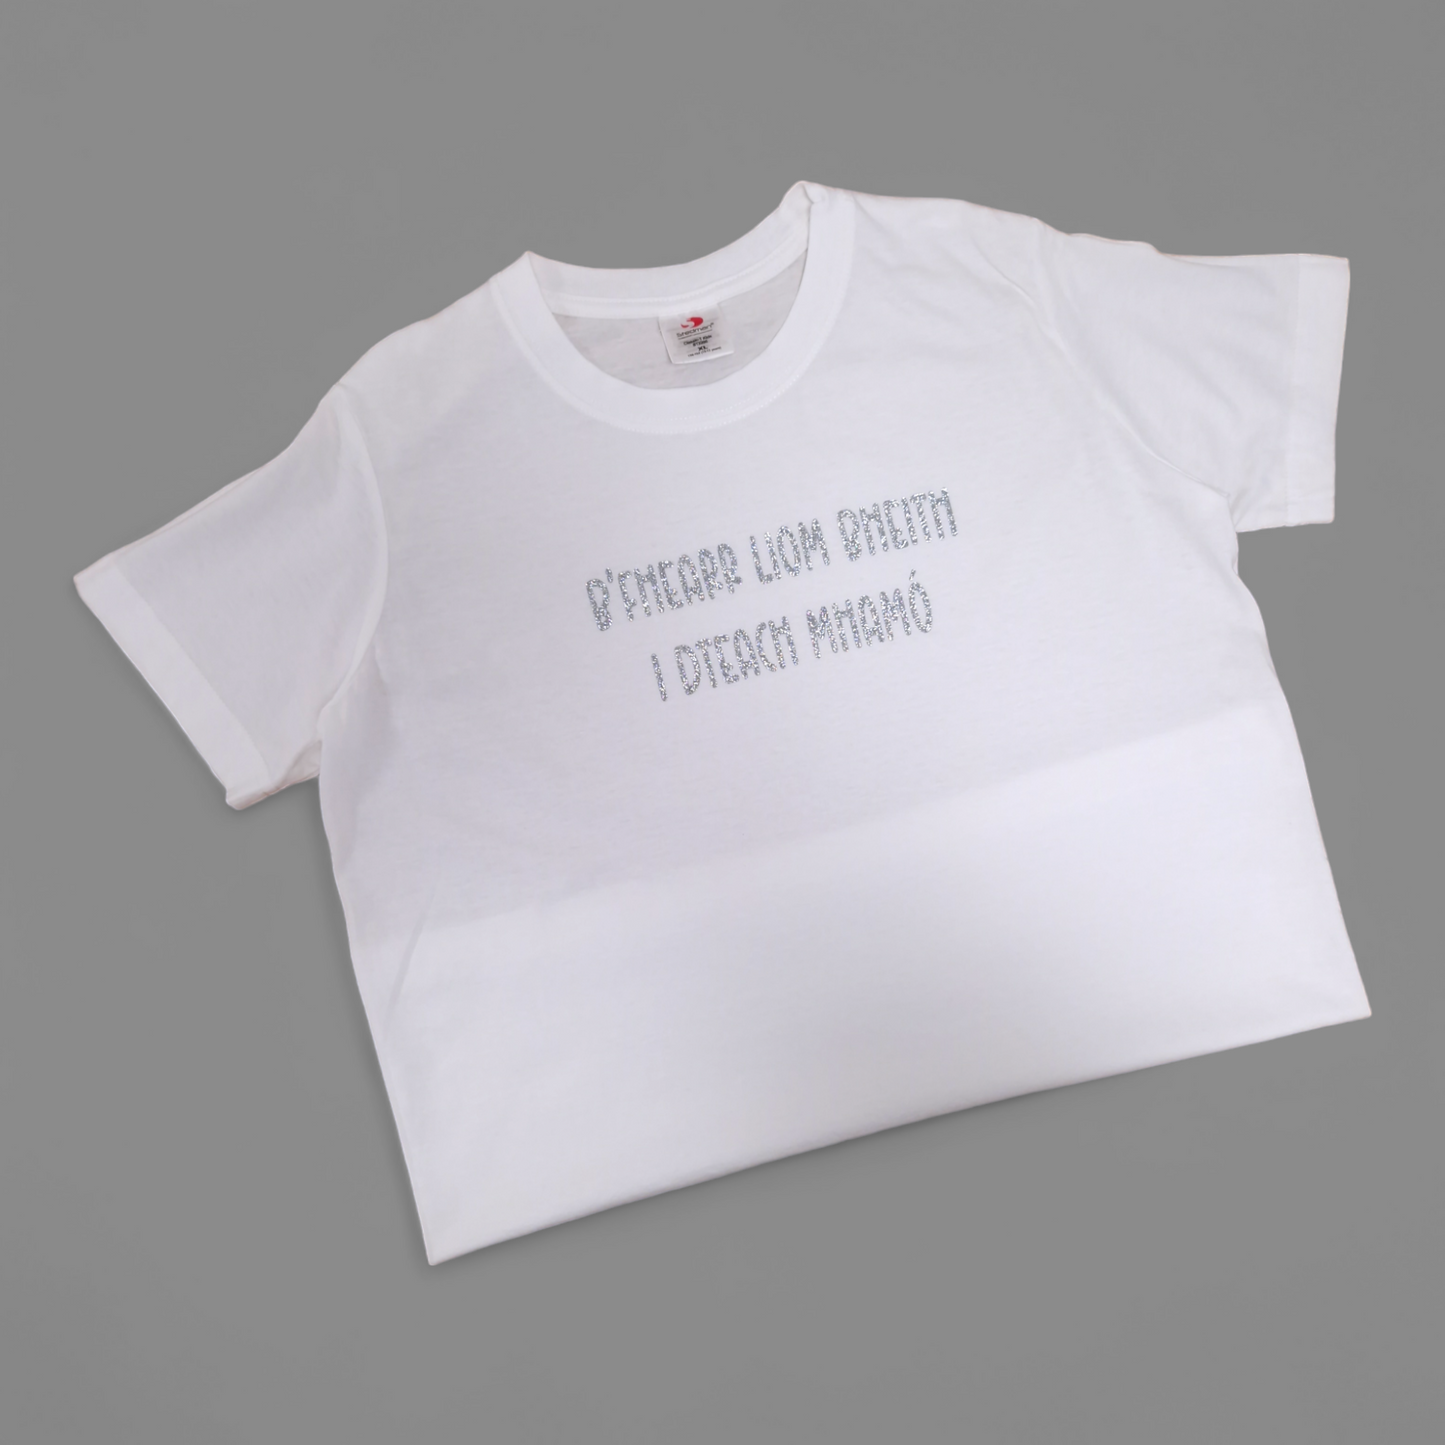 T-Shirt - 12-13 Years - B'Fhearr liom bheith i dteach mhamó - White